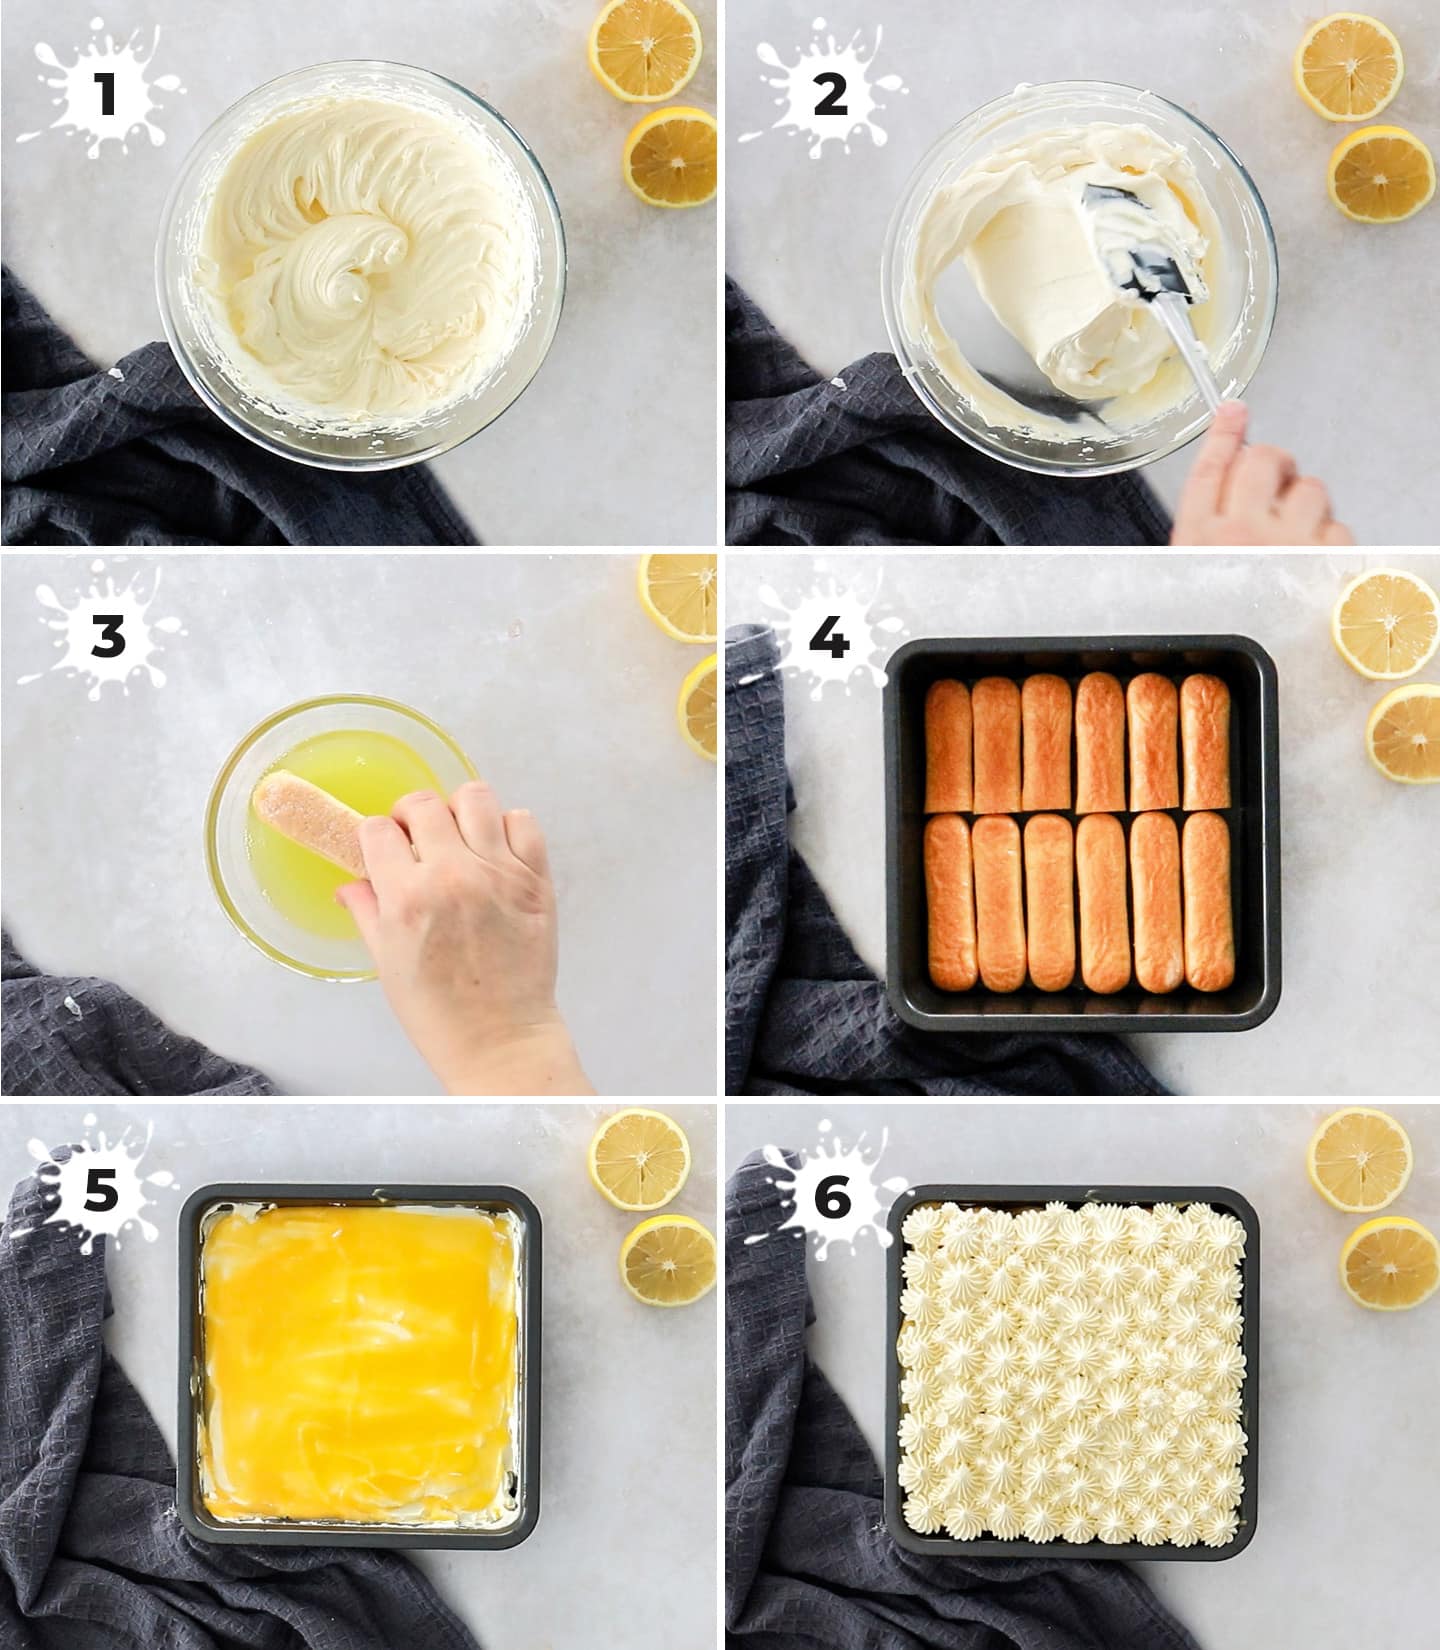 A collage of 6 images showing how to make lemon tiramisu.